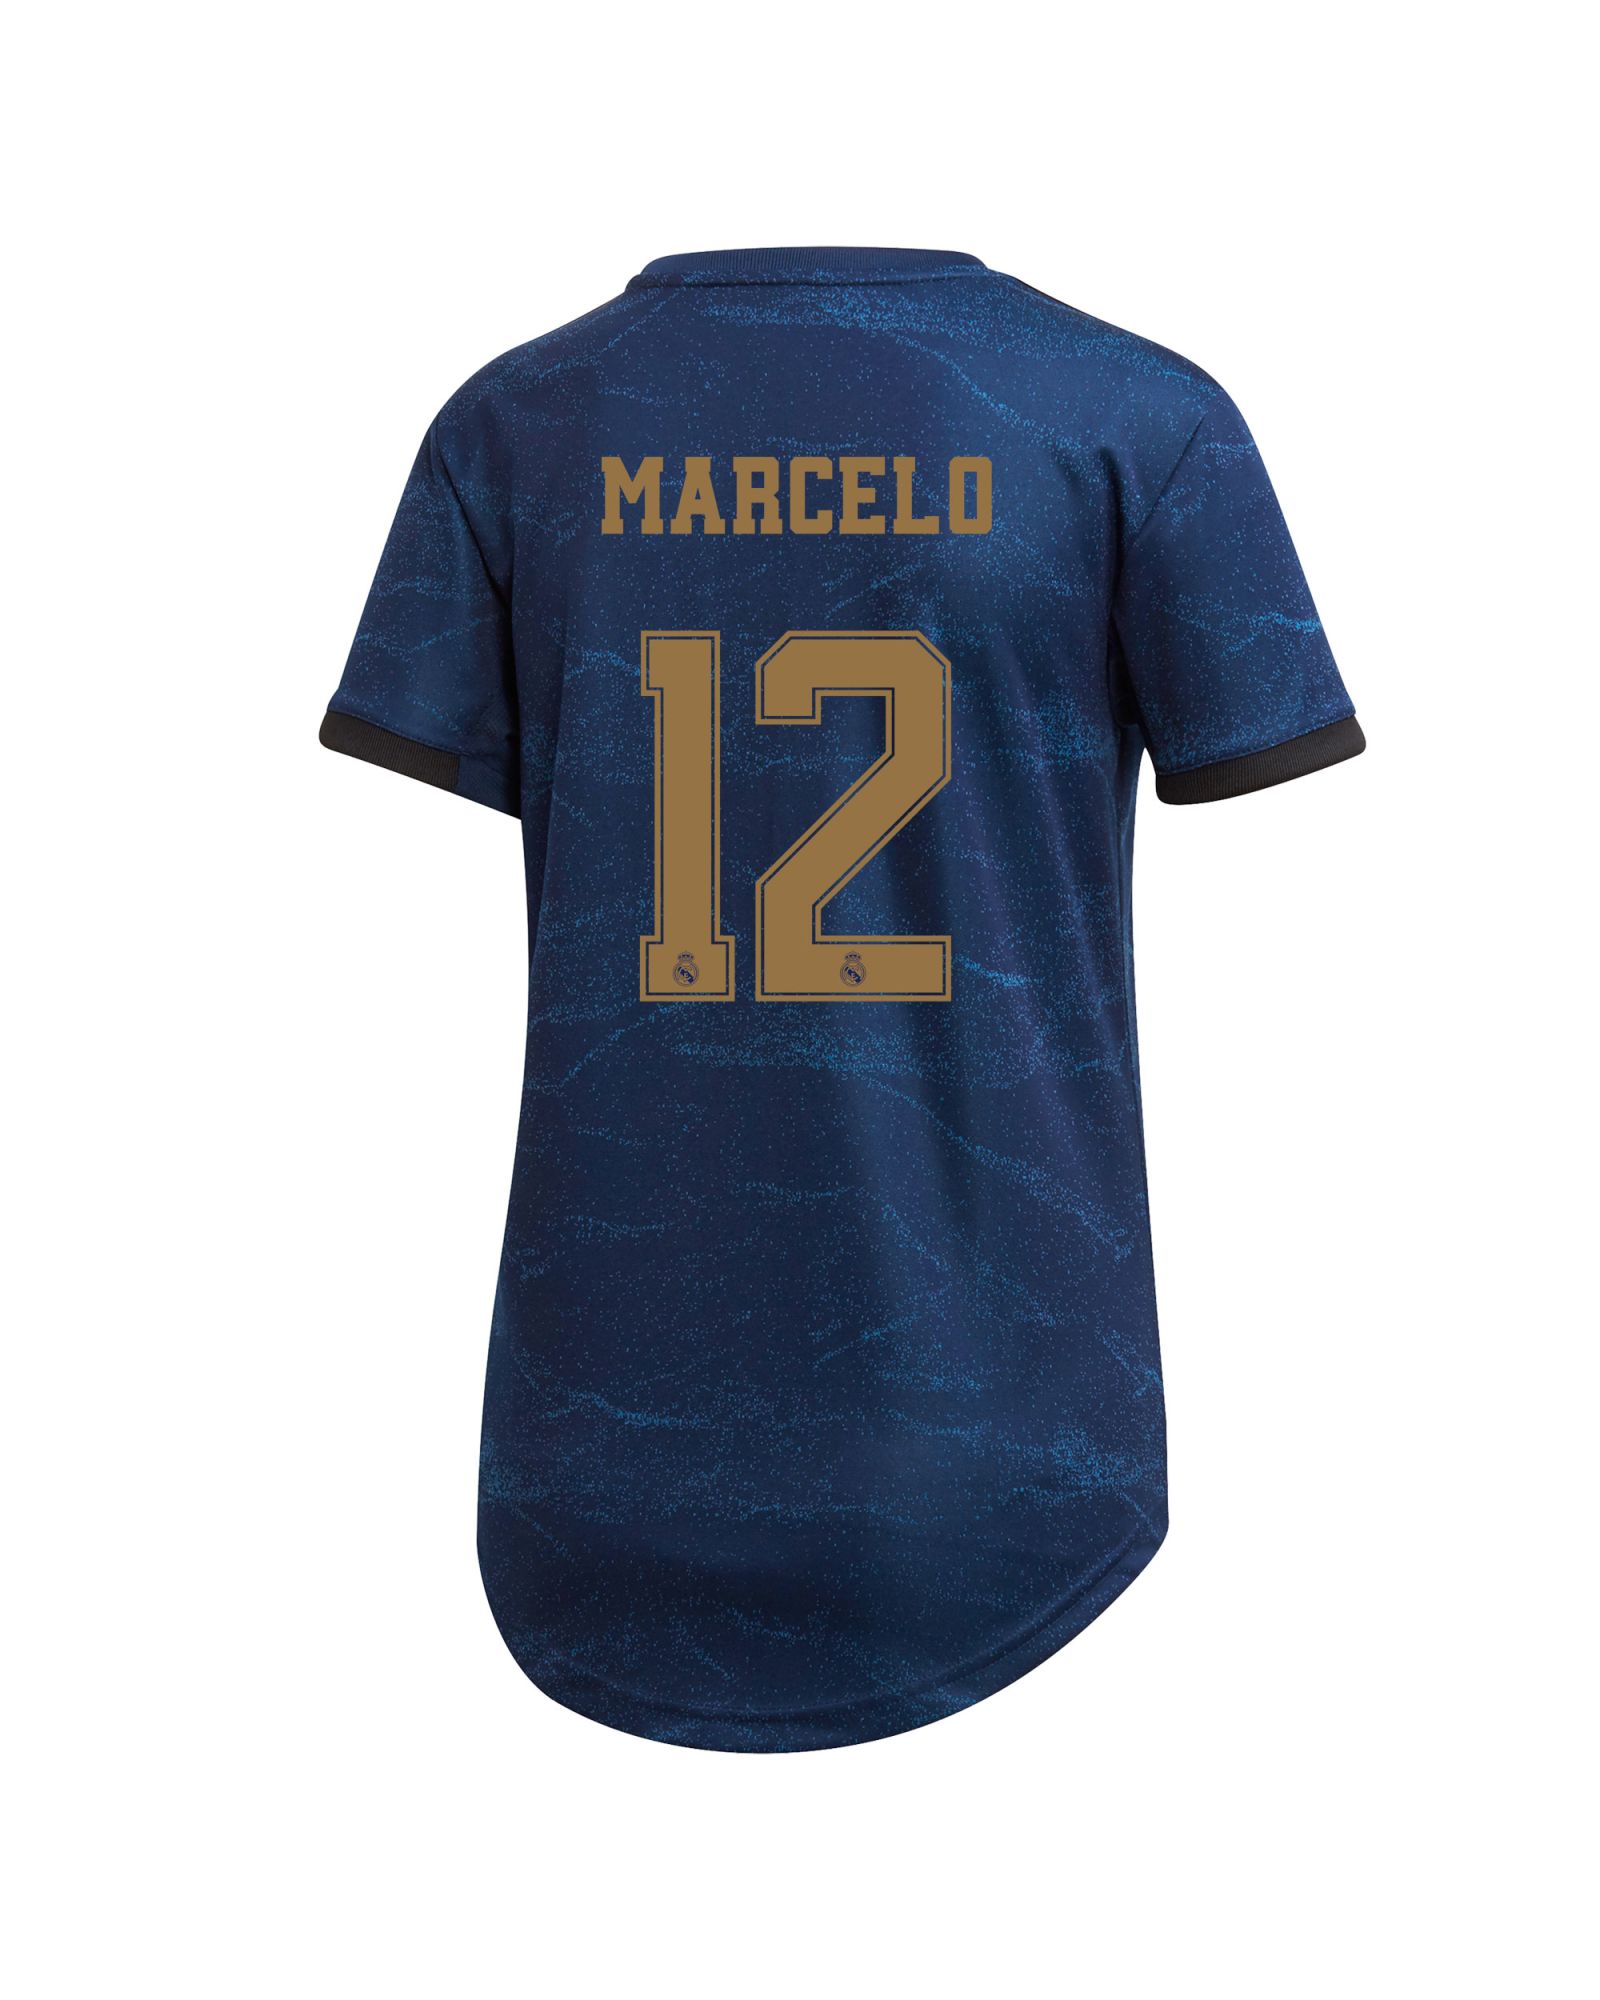 Camiseta 2ª Real Madrid 2019/2020 Authentic Marcelo - Fútbol Factory